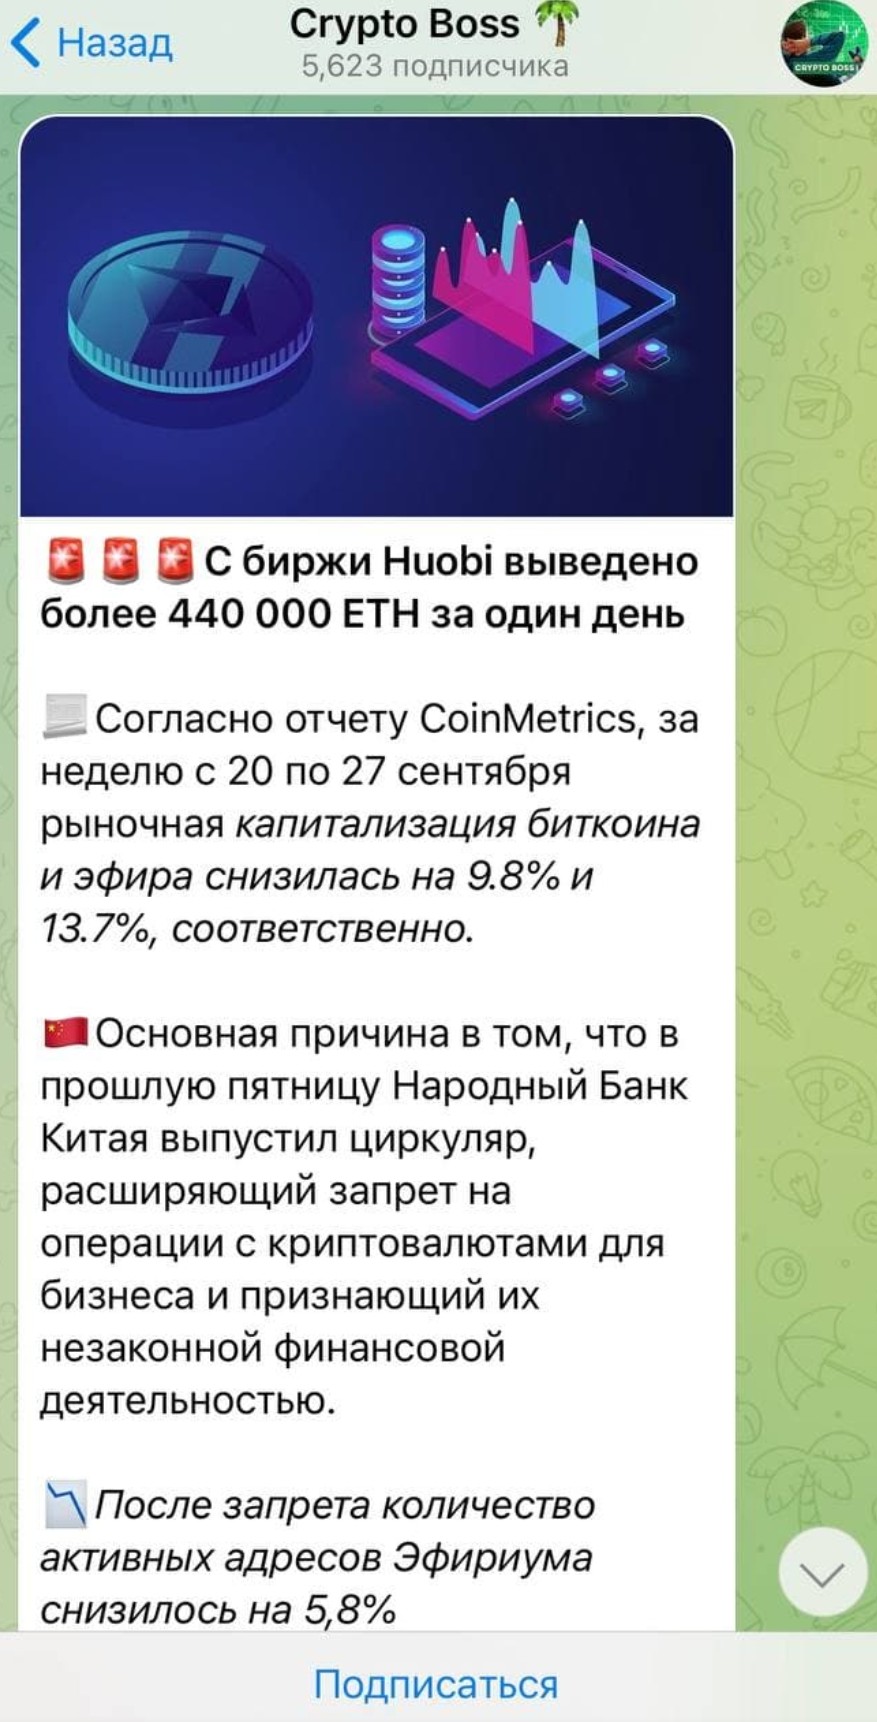 Crypto boss telegram